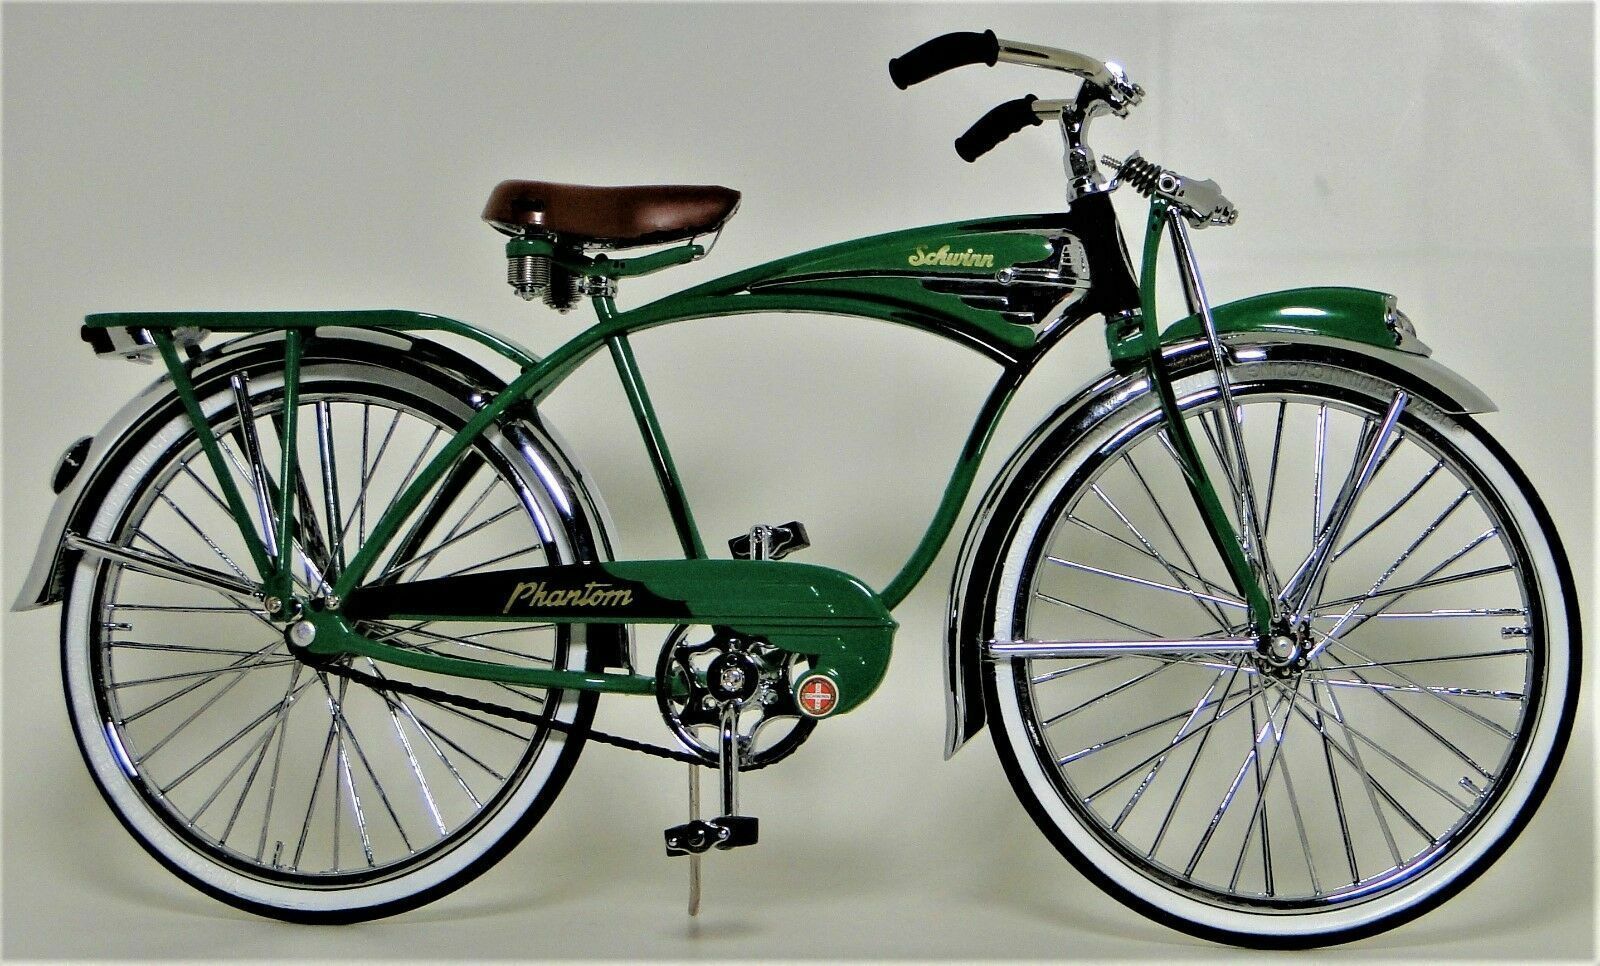 Schwinn Vintage Bicycle Rare 1950s Bike Cycle Metal Model Length: 11.5 Inches